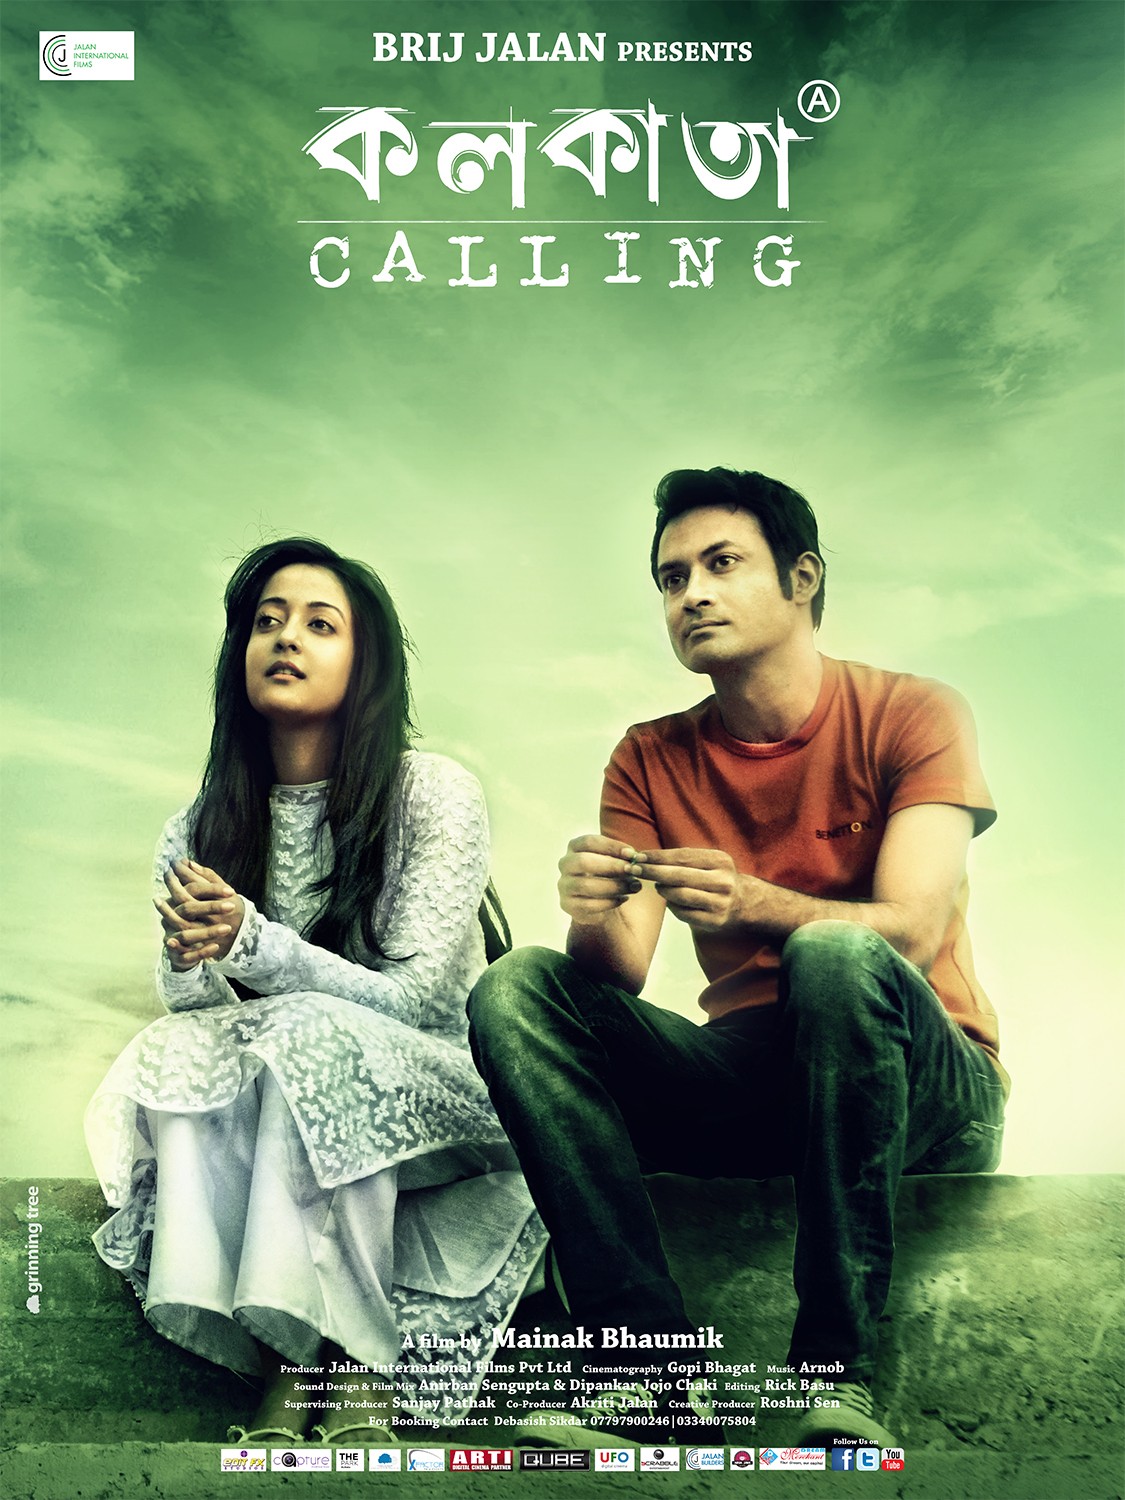 Extra Large Movie Poster Image for Kolkata Calling (#5 of 6)